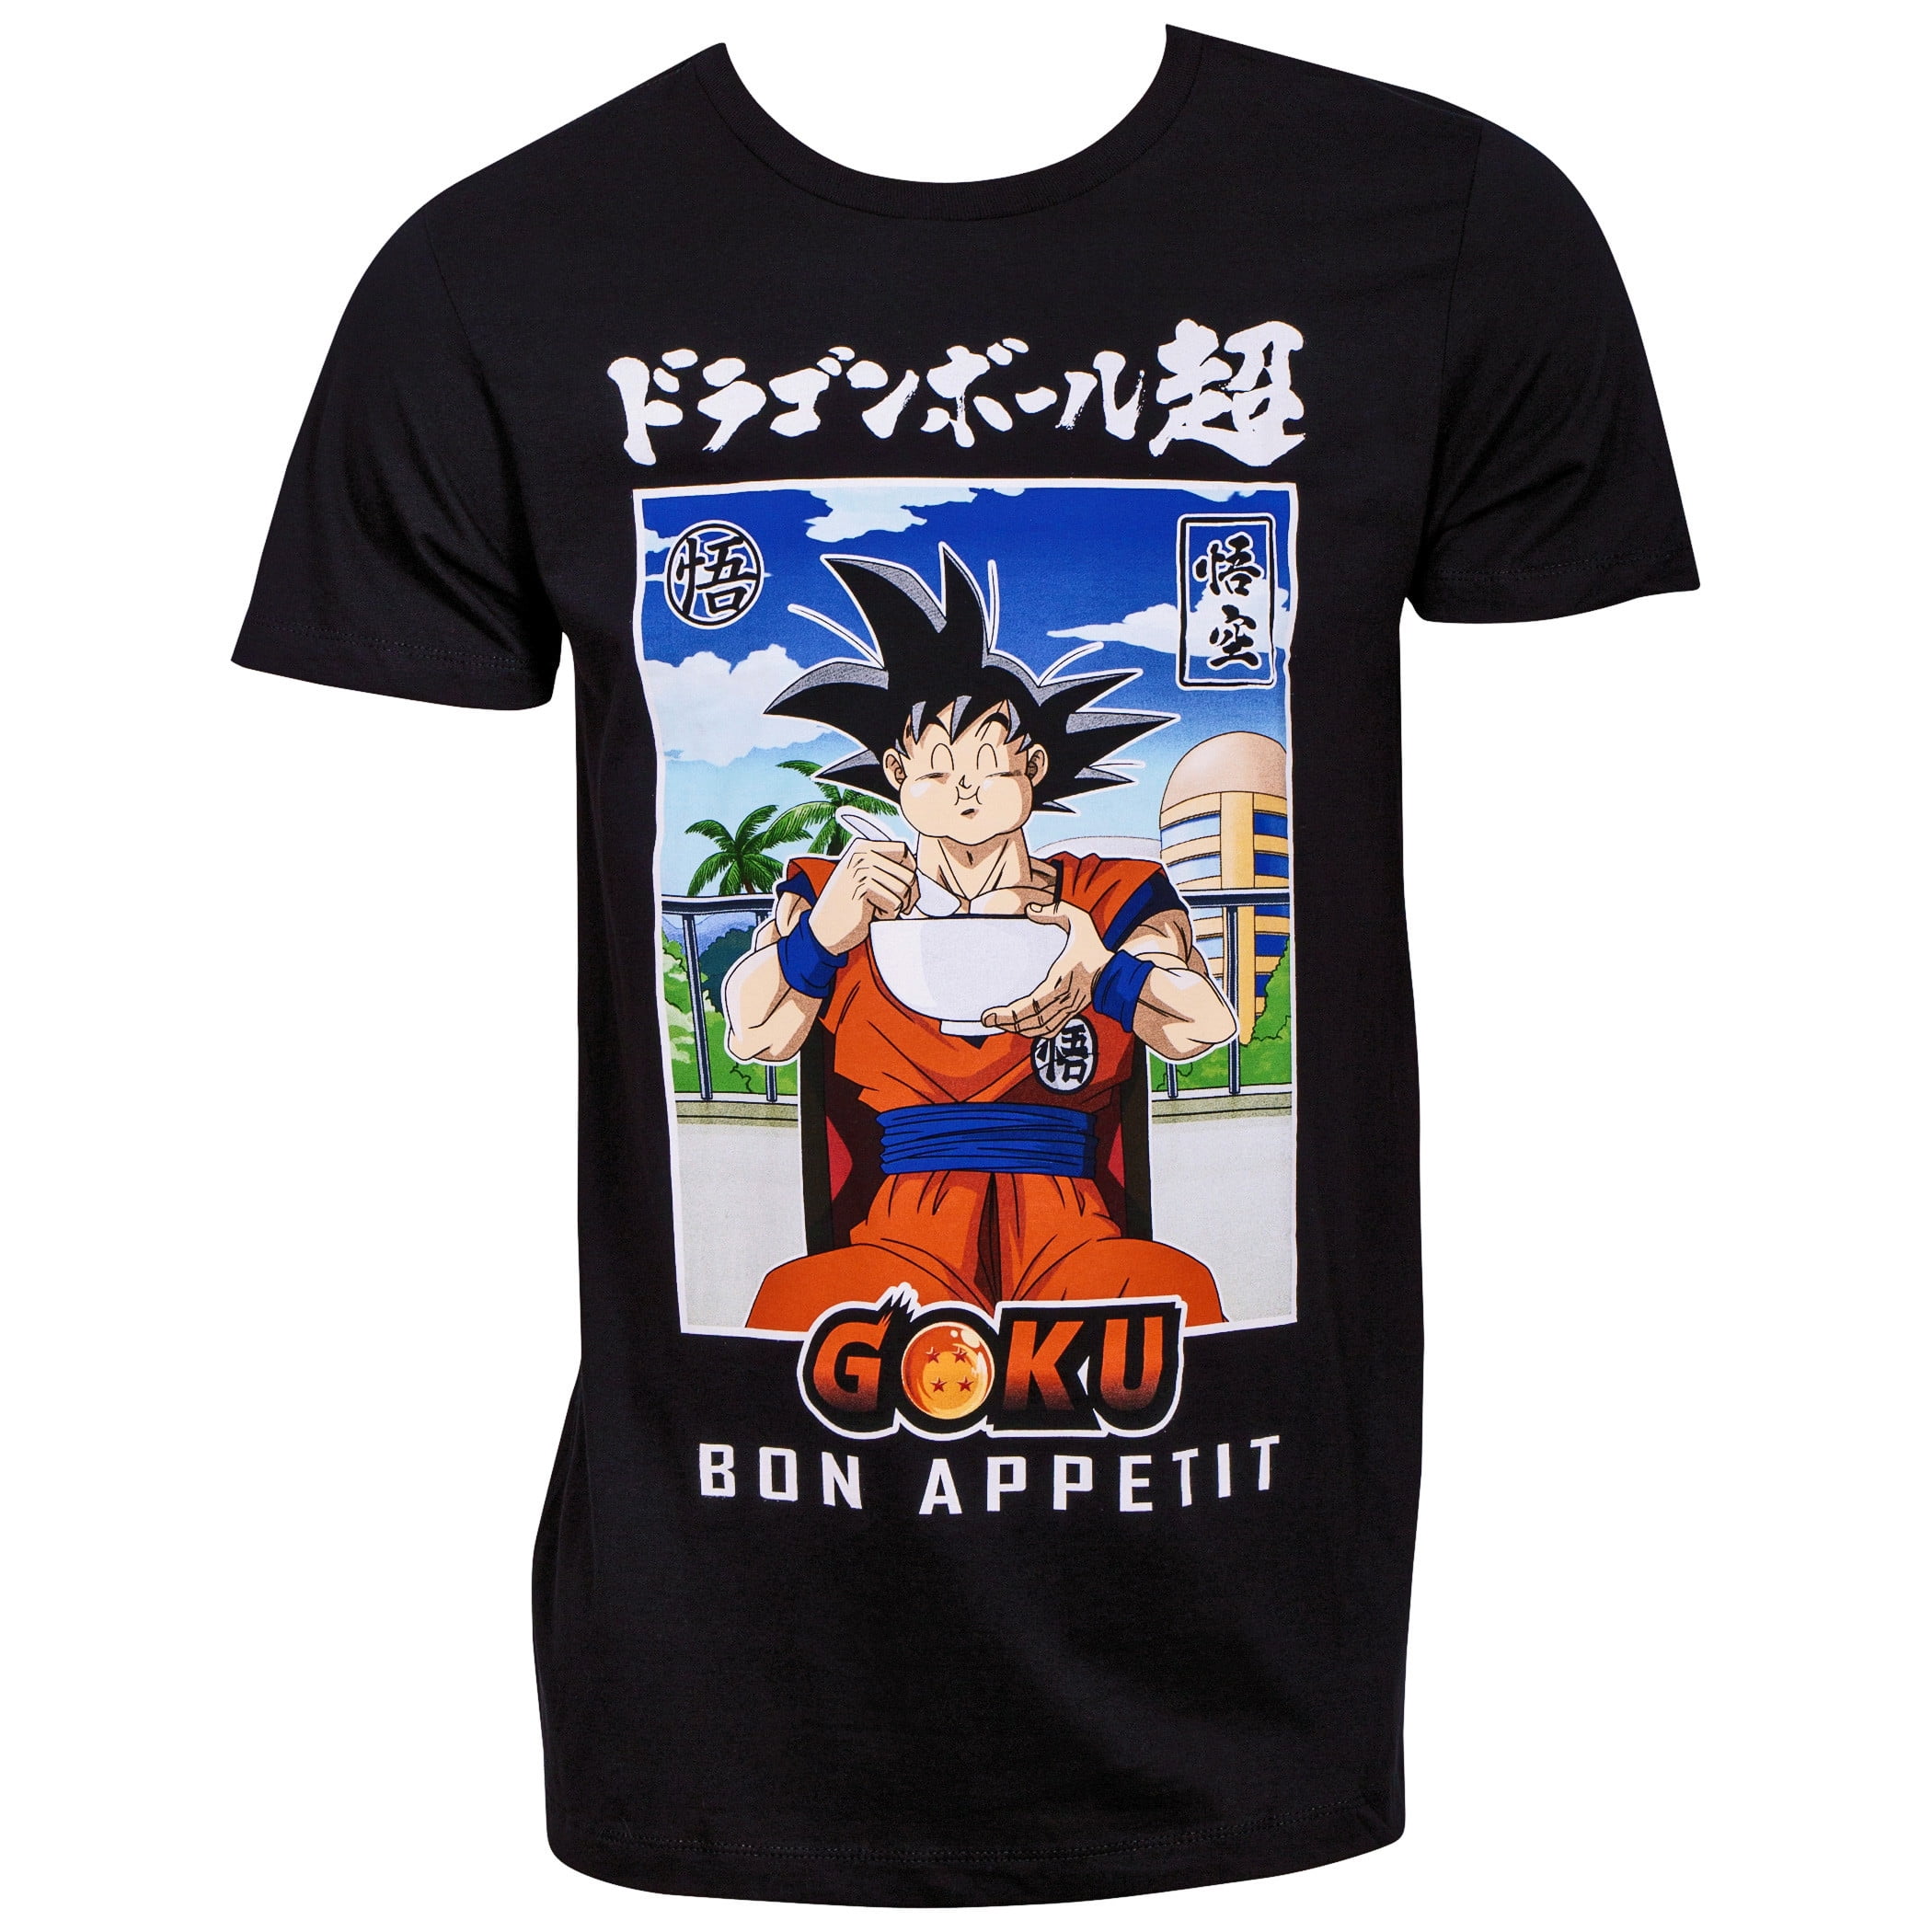 Orange 2 Sided Graphic Shirt Size M Son Goku Champion Brand Dragon Ball Z 